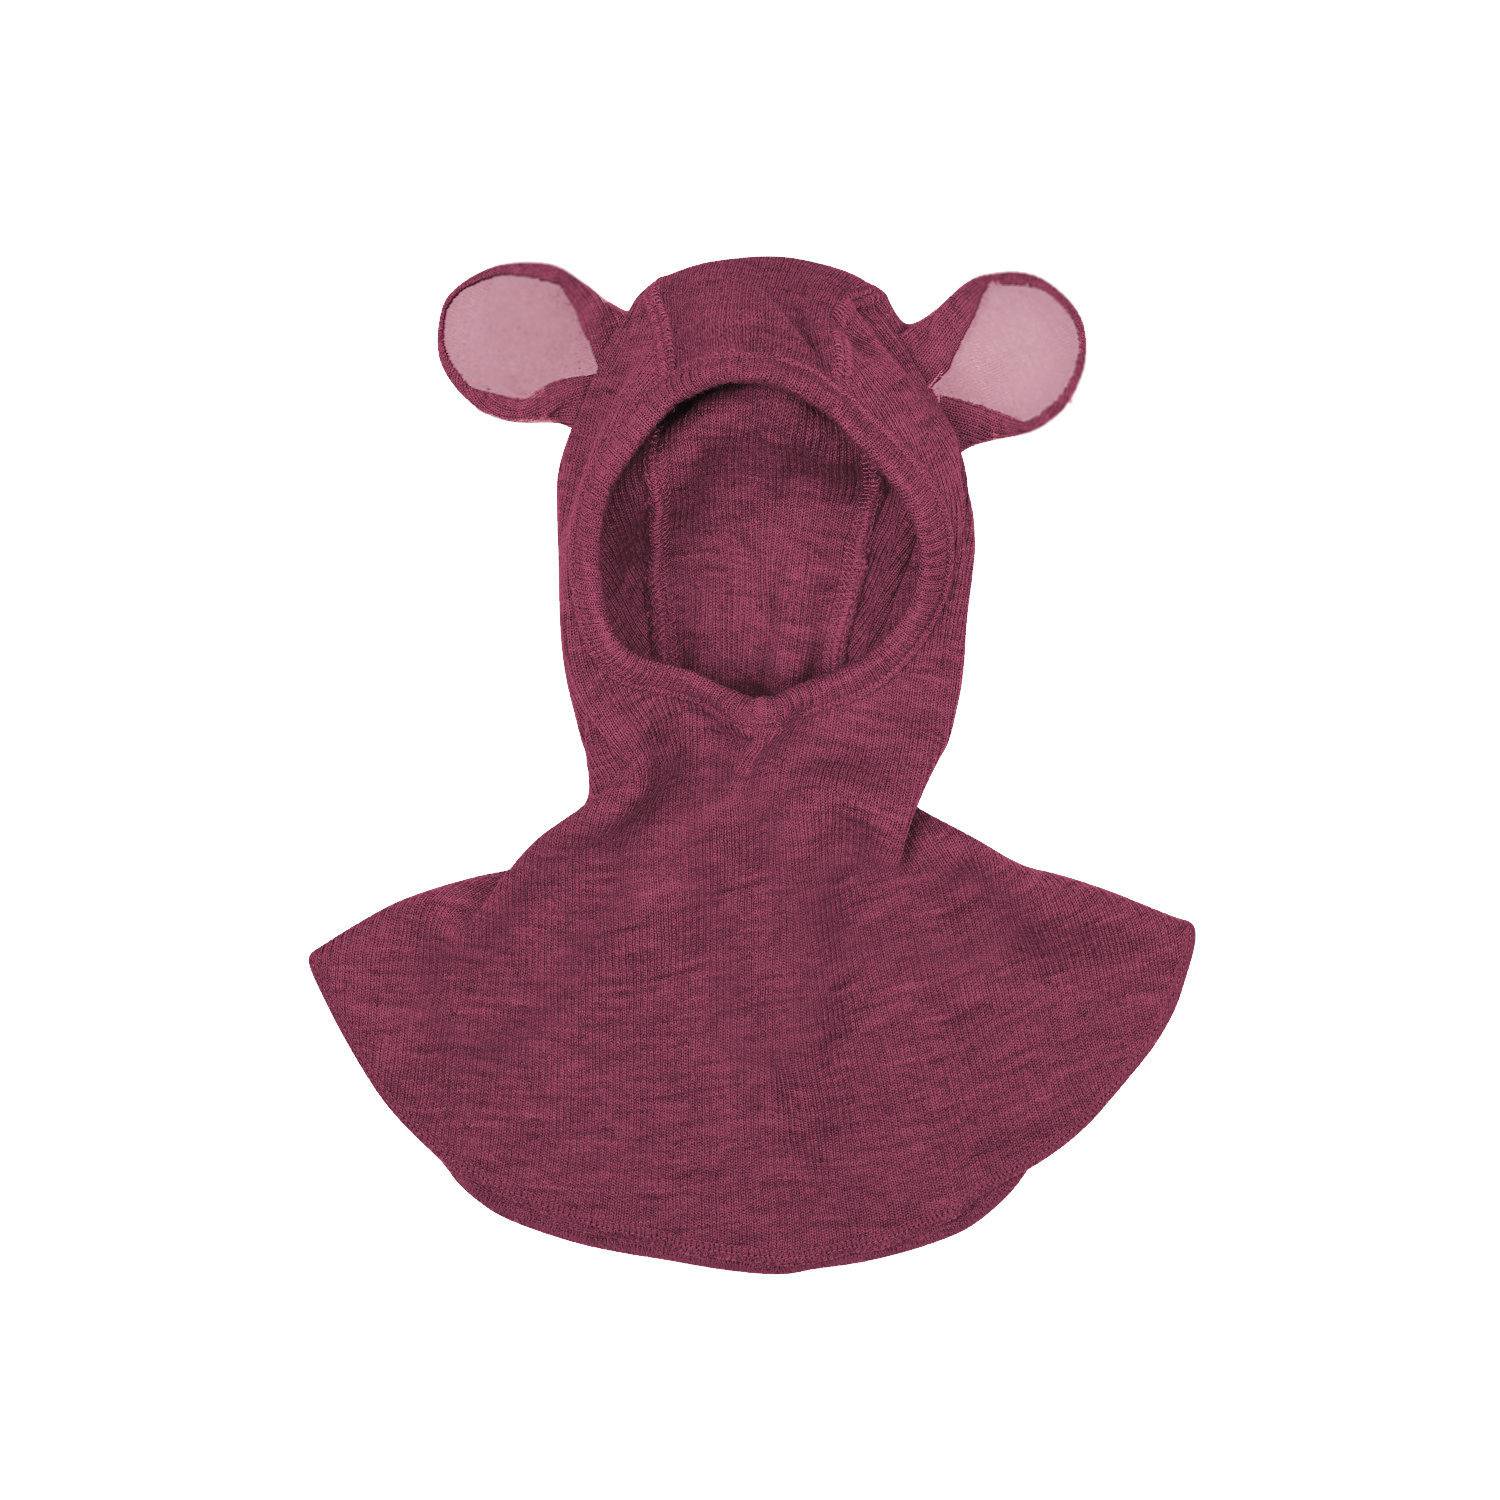 ManyMonths Natural Woollies Elephant Hood with Teddy Bear Ears UNiQUE, Adventurer/Conqueror, Dark Cerise